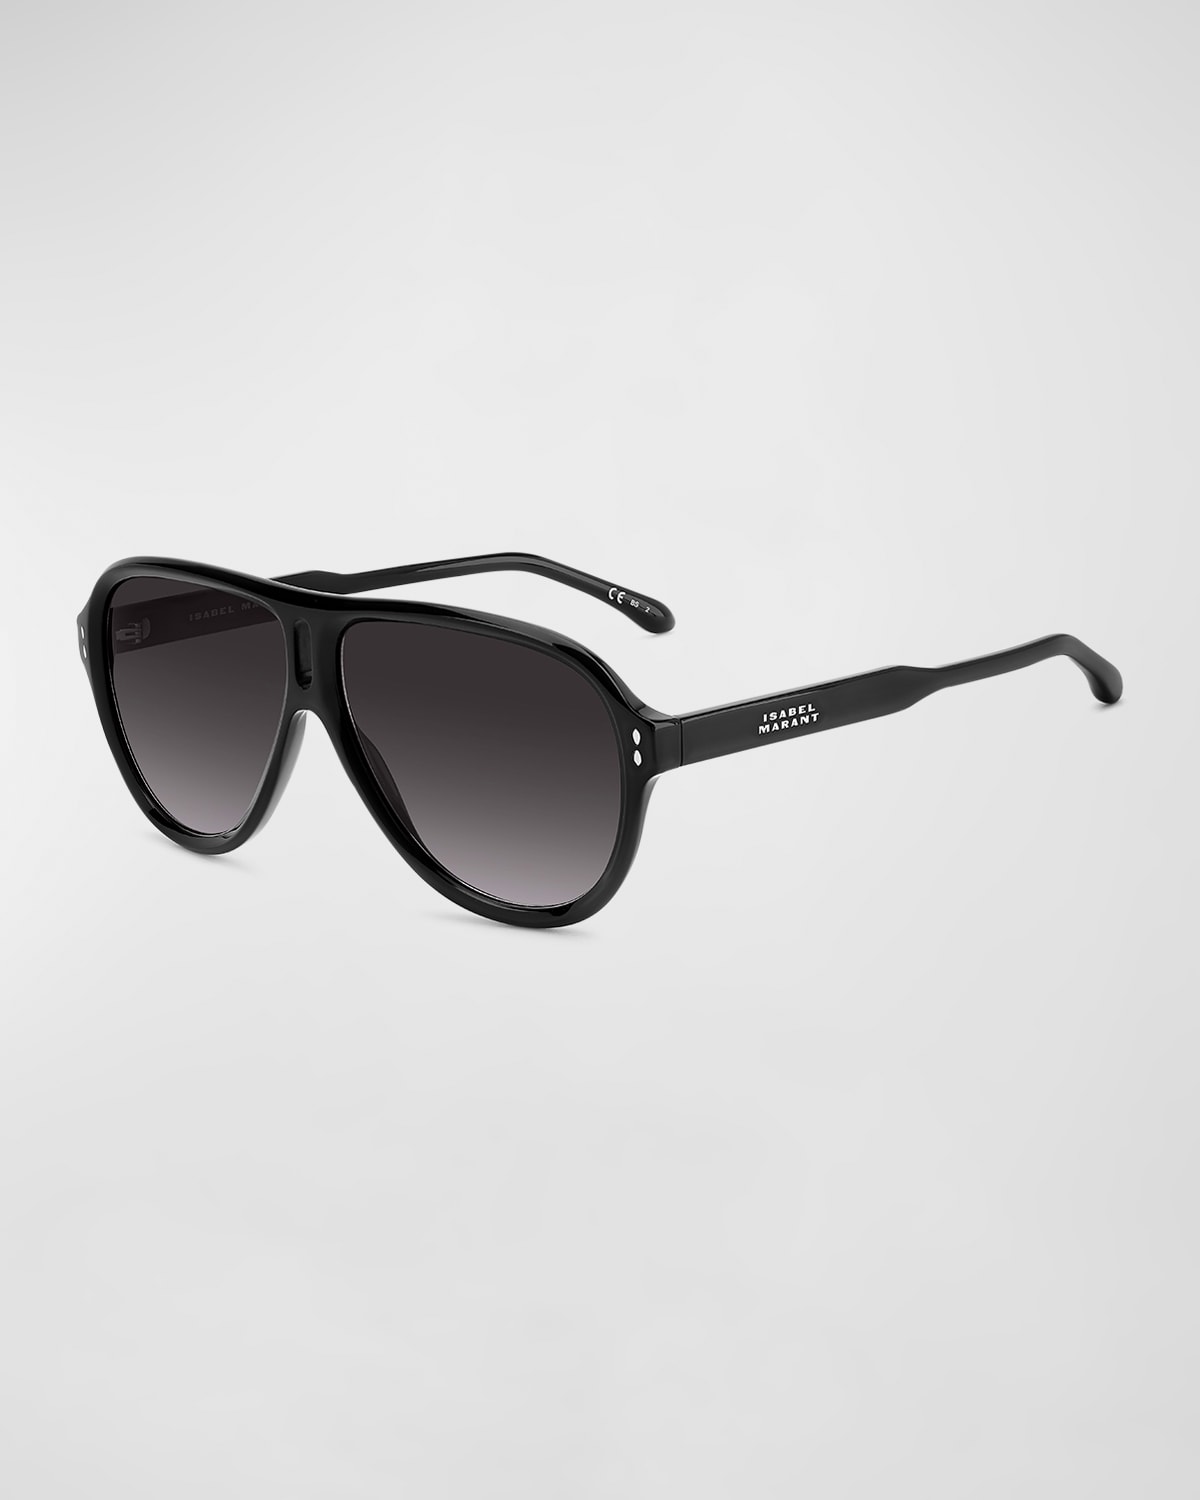 Isabel Marant Logo Acetate Aviator Sunglasses In Black/gray Gradient